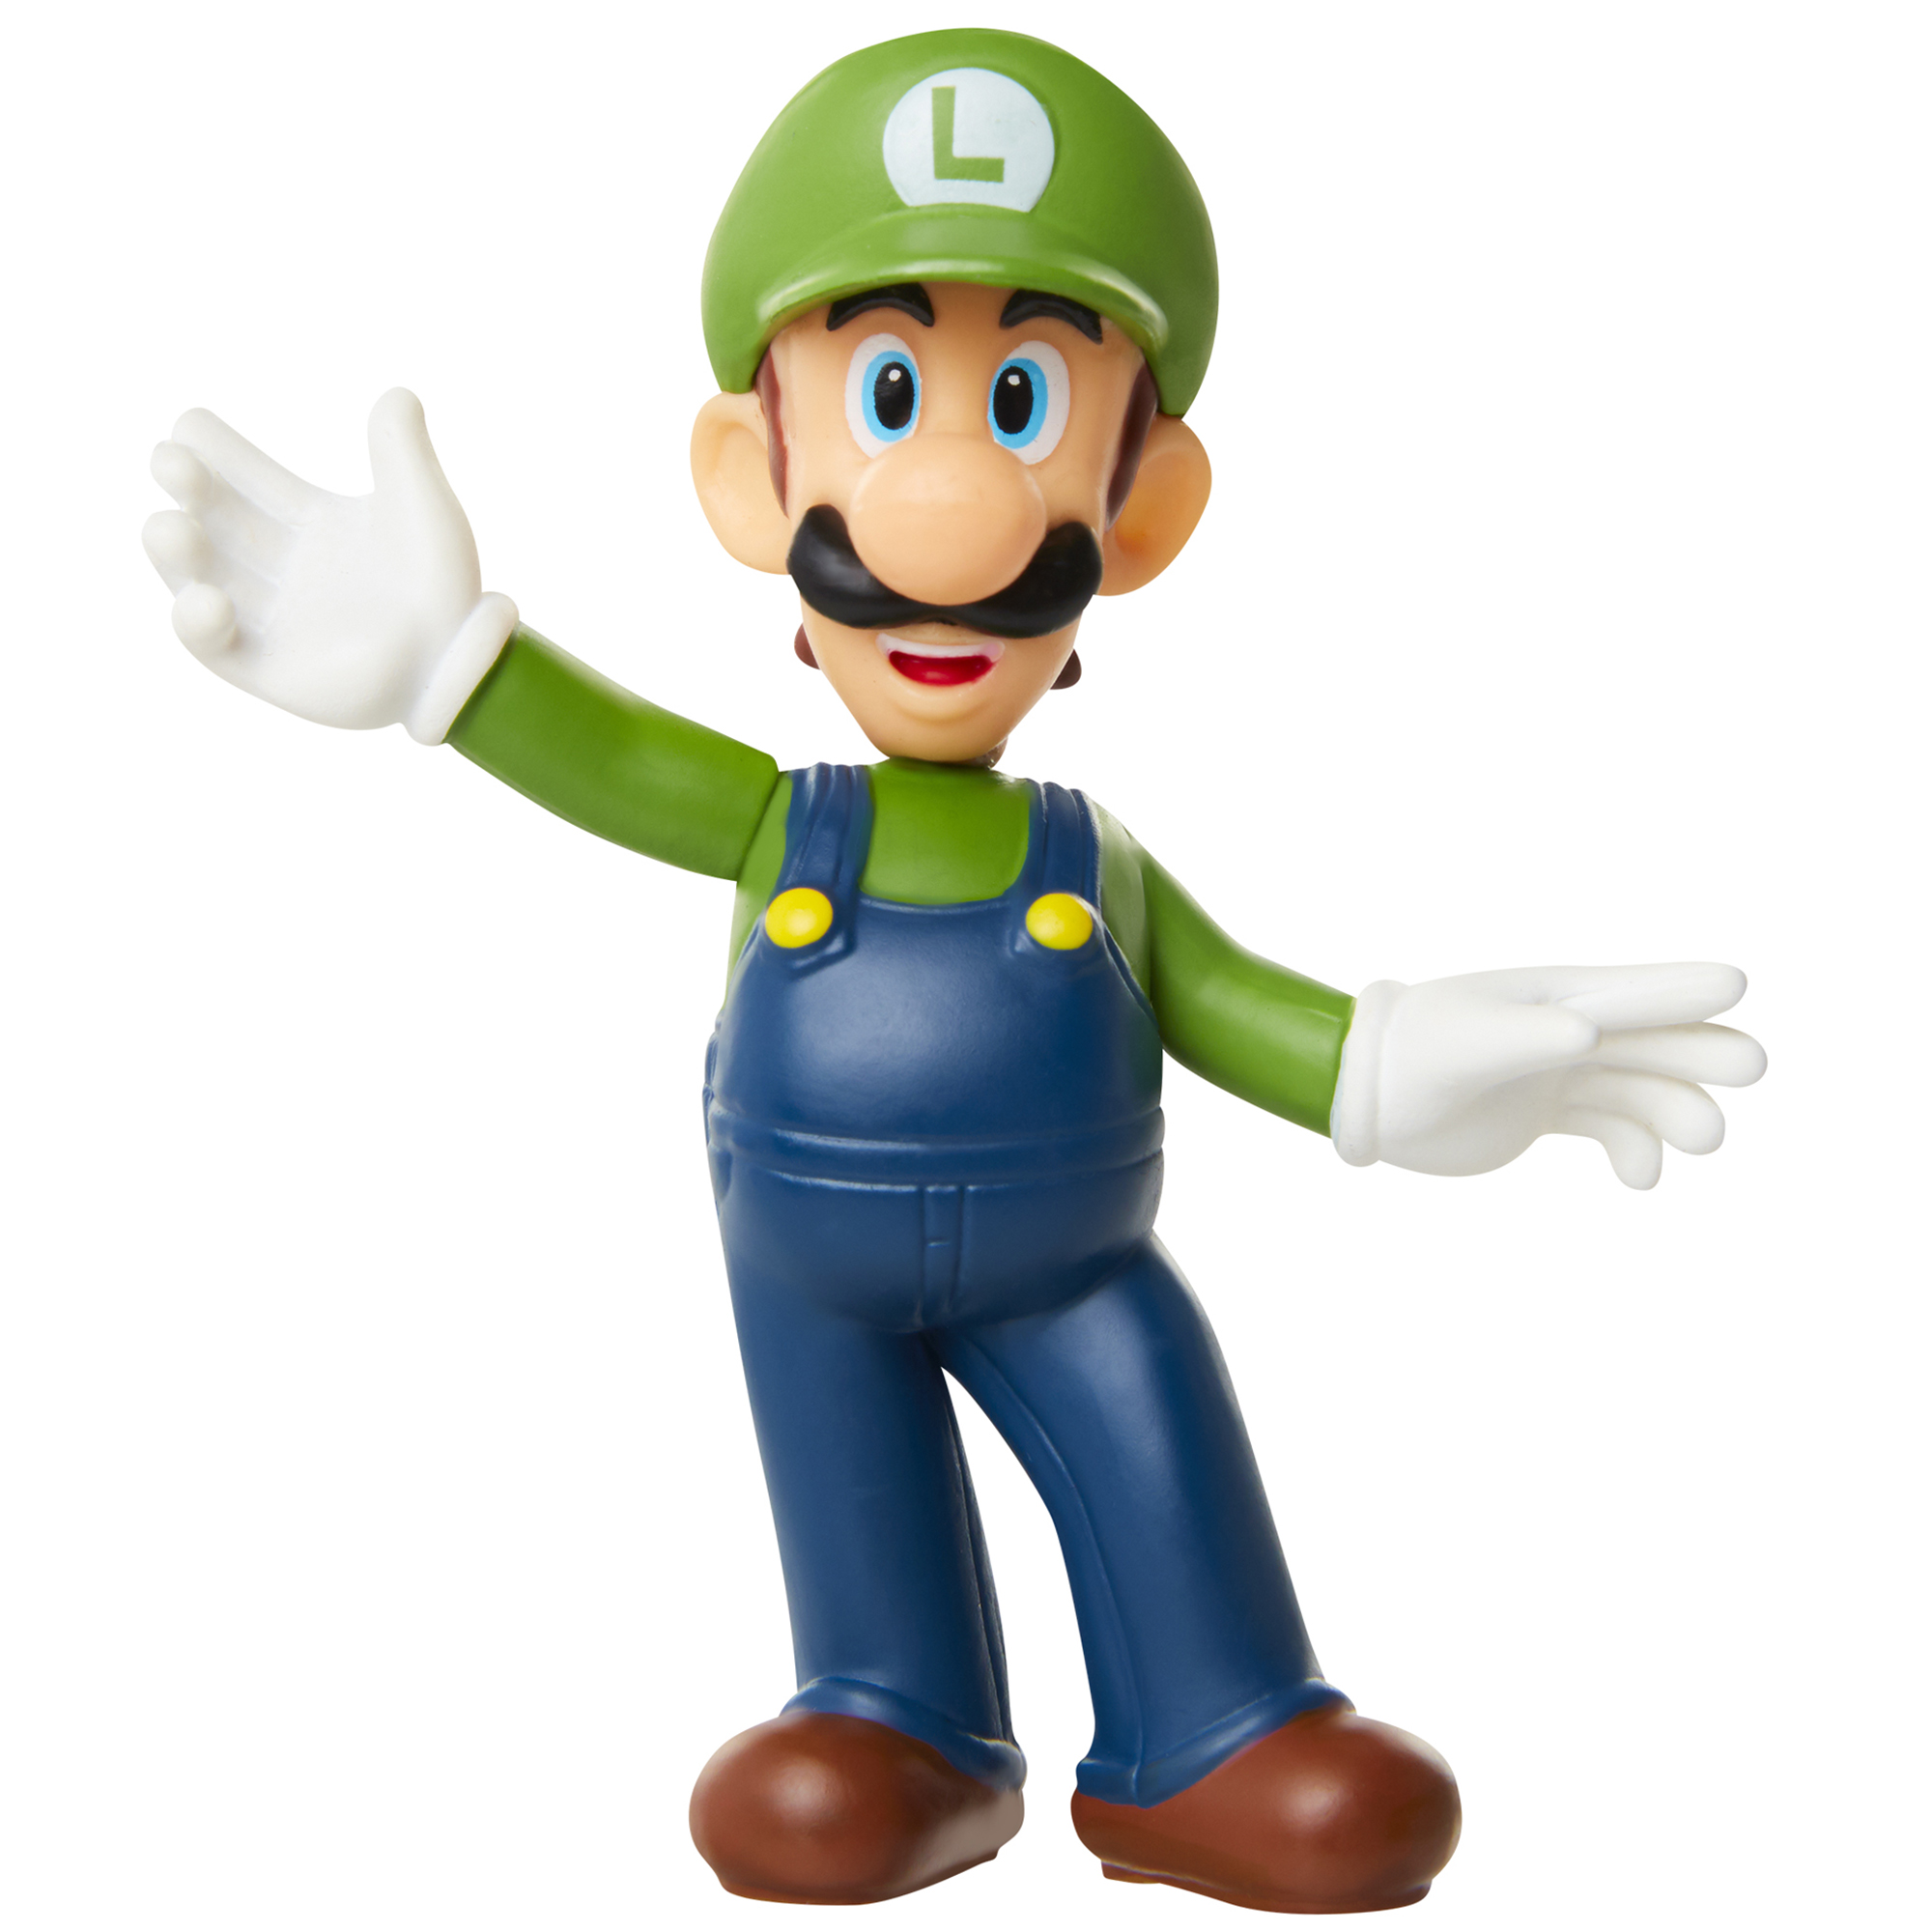 Mario - Super Mario Figurine by JAKKS